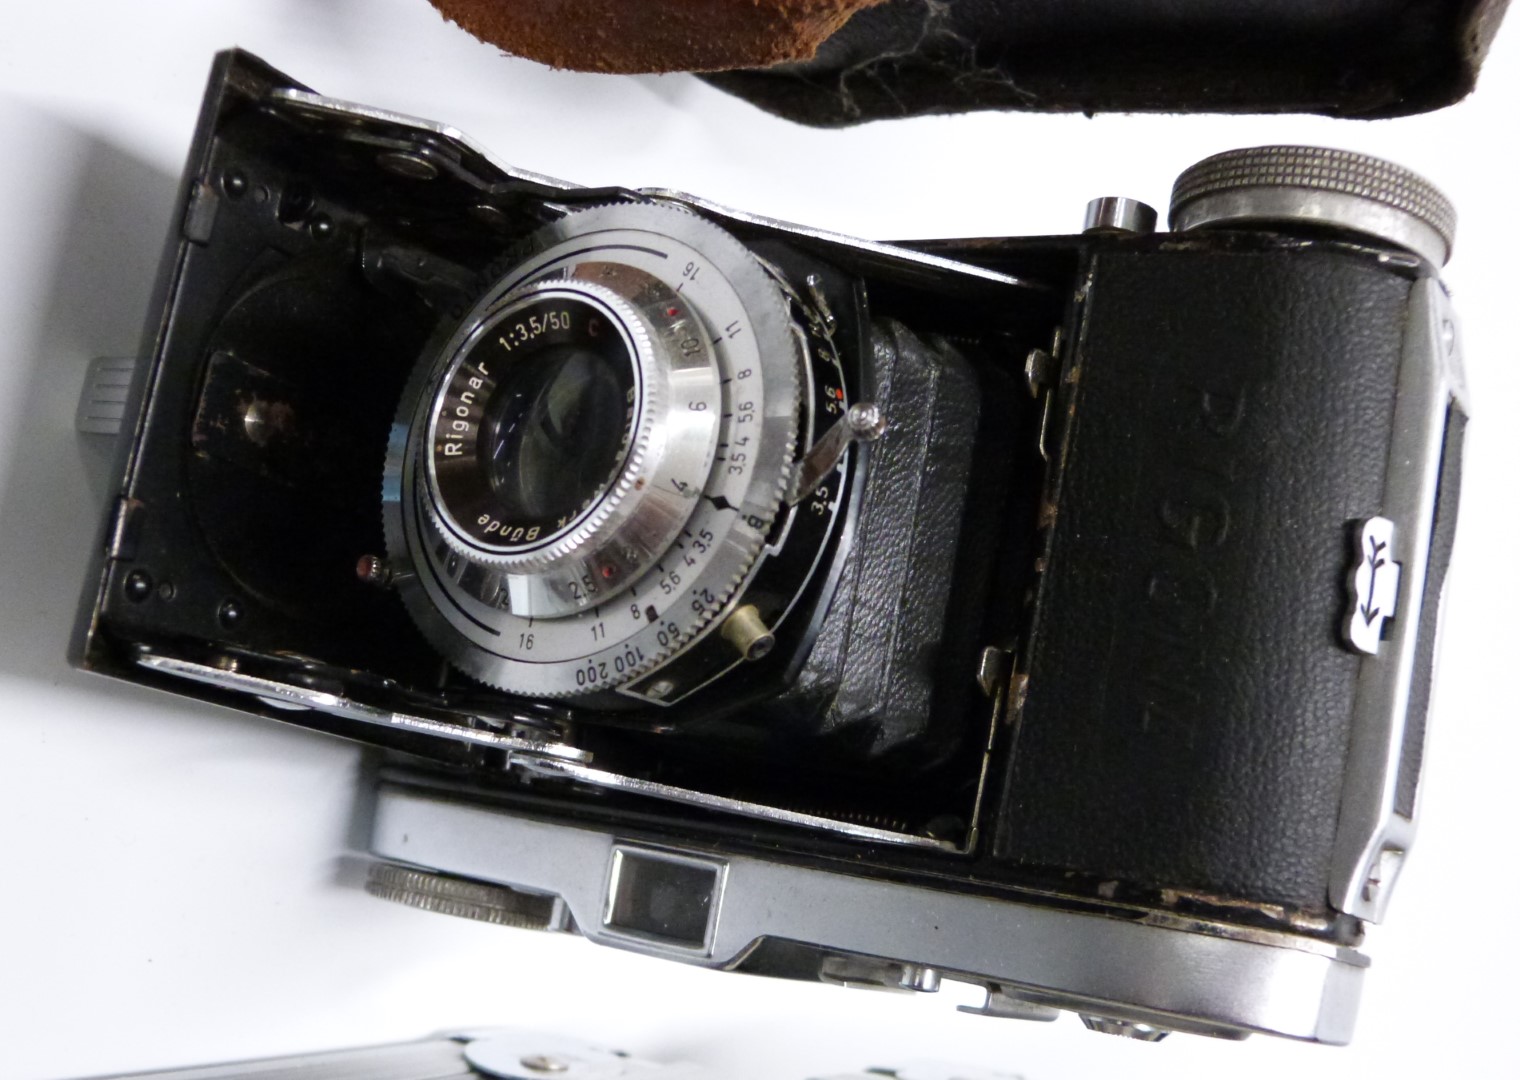 Collectable cameras to include Balda Rigona folding camera, FED 4, Agfa Isola, Zeiss Ikon Contessa - Image 5 of 6